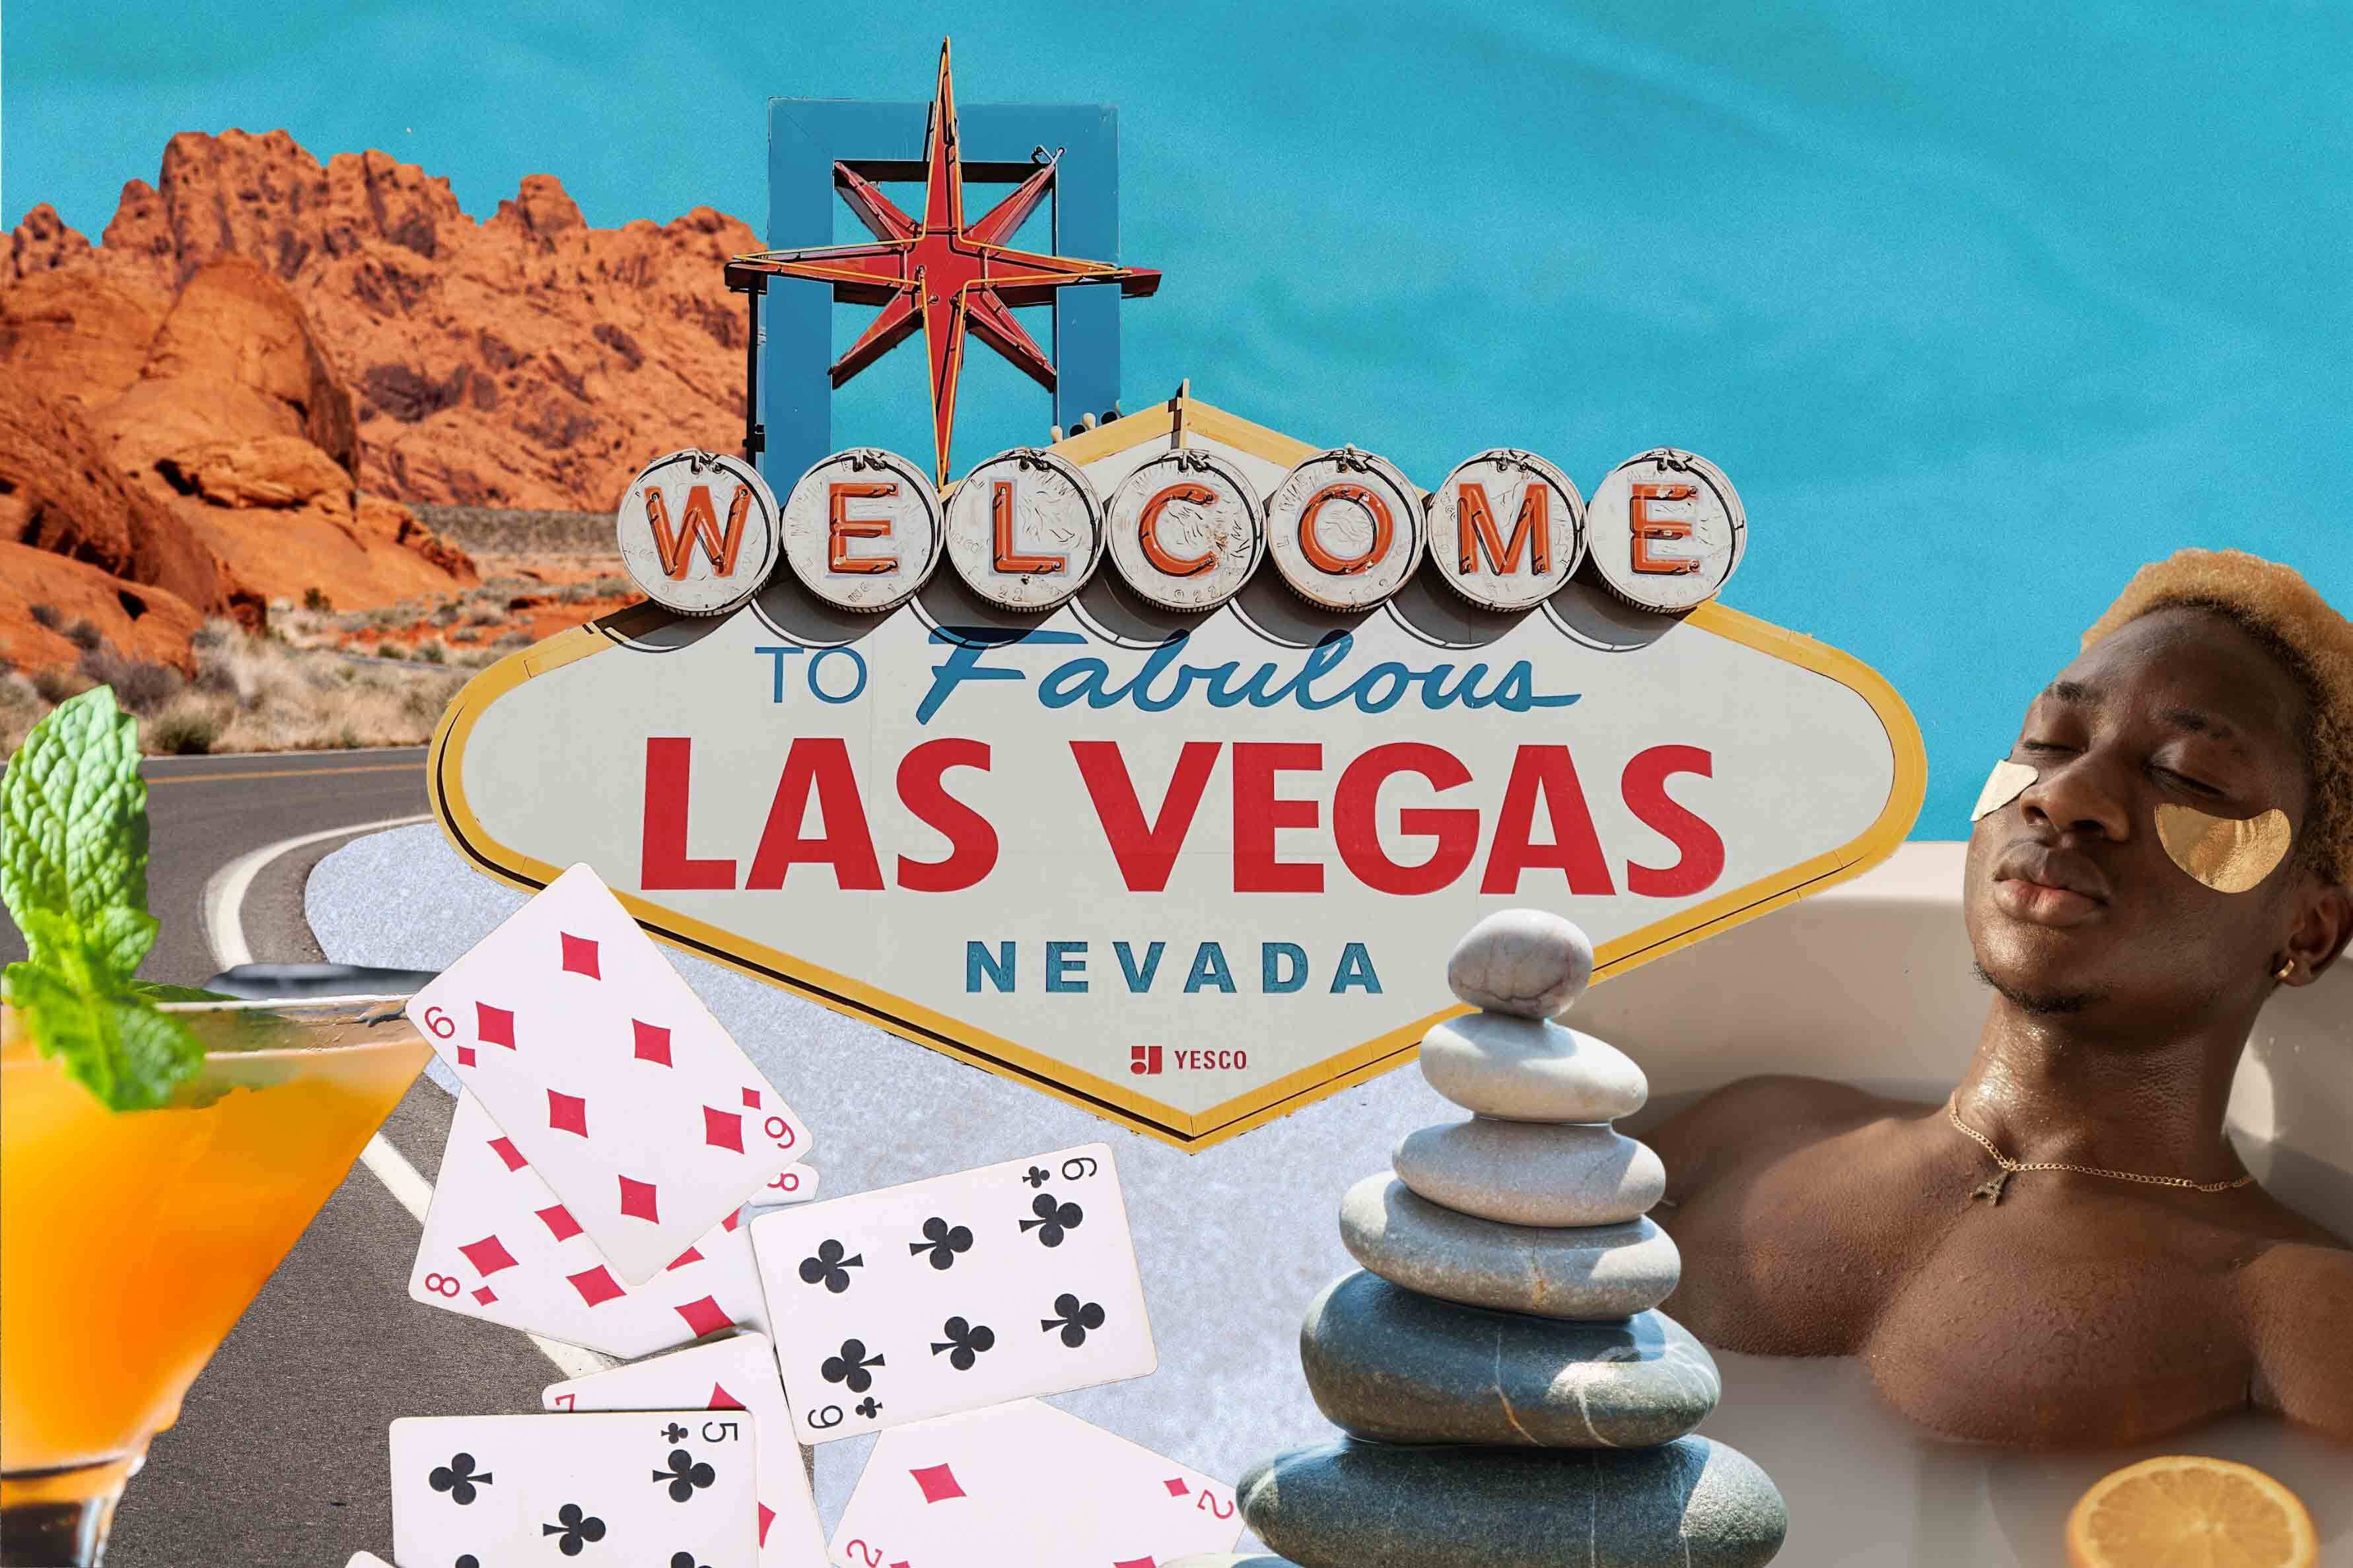 The Flamingo Las Vegas  Las Vegas Vacation Ideas and Guides